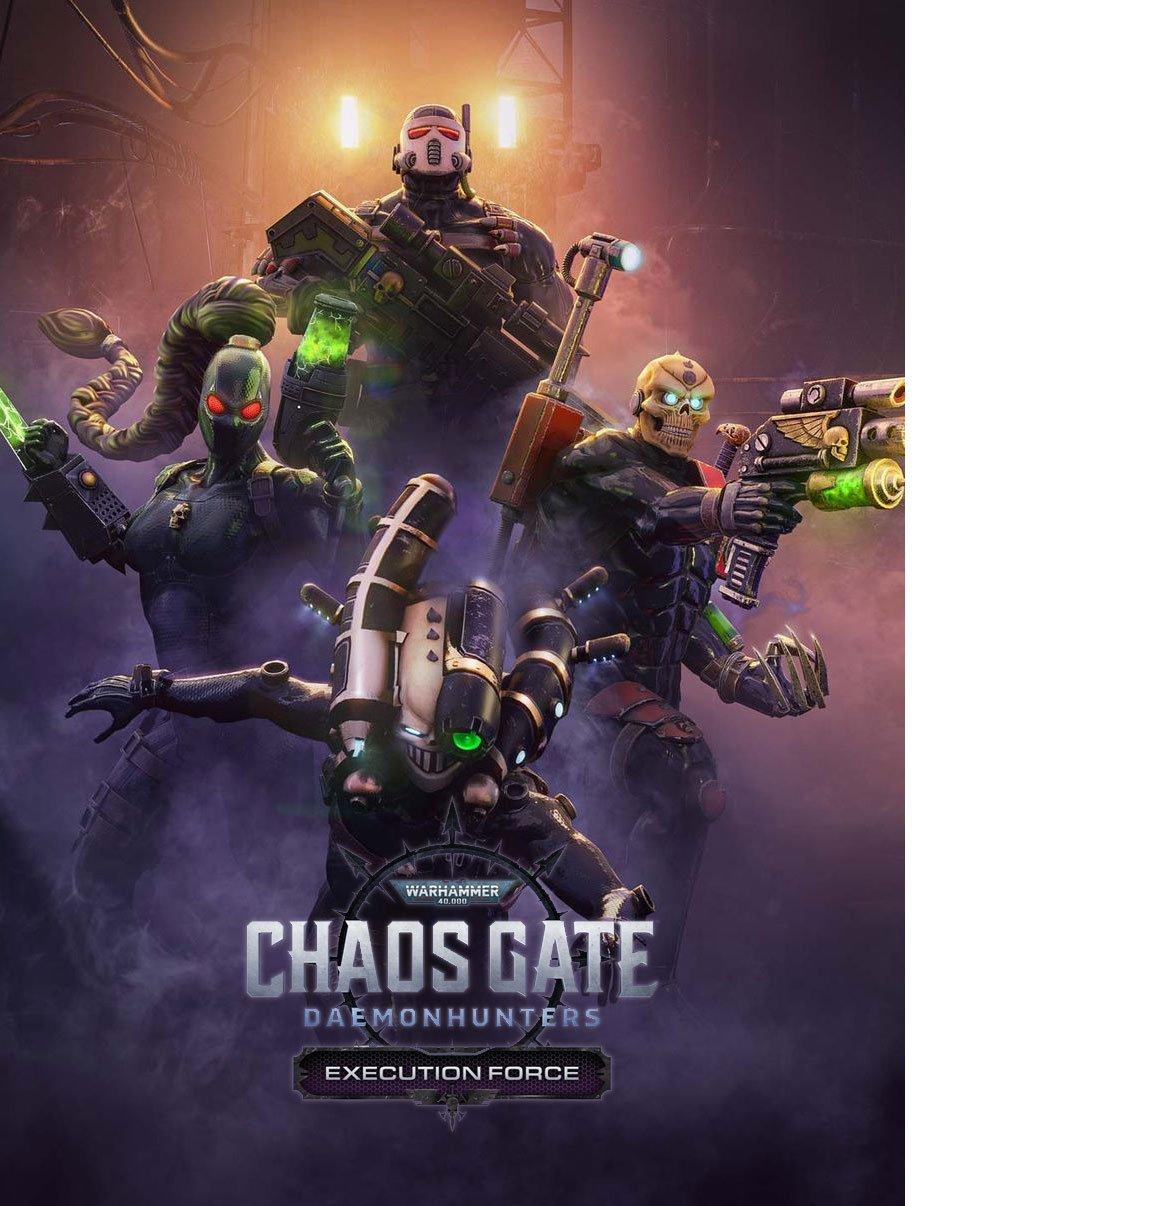 Warhammer 40,000: Chaosgate Daemonhunters - Execution Force DLC - PC